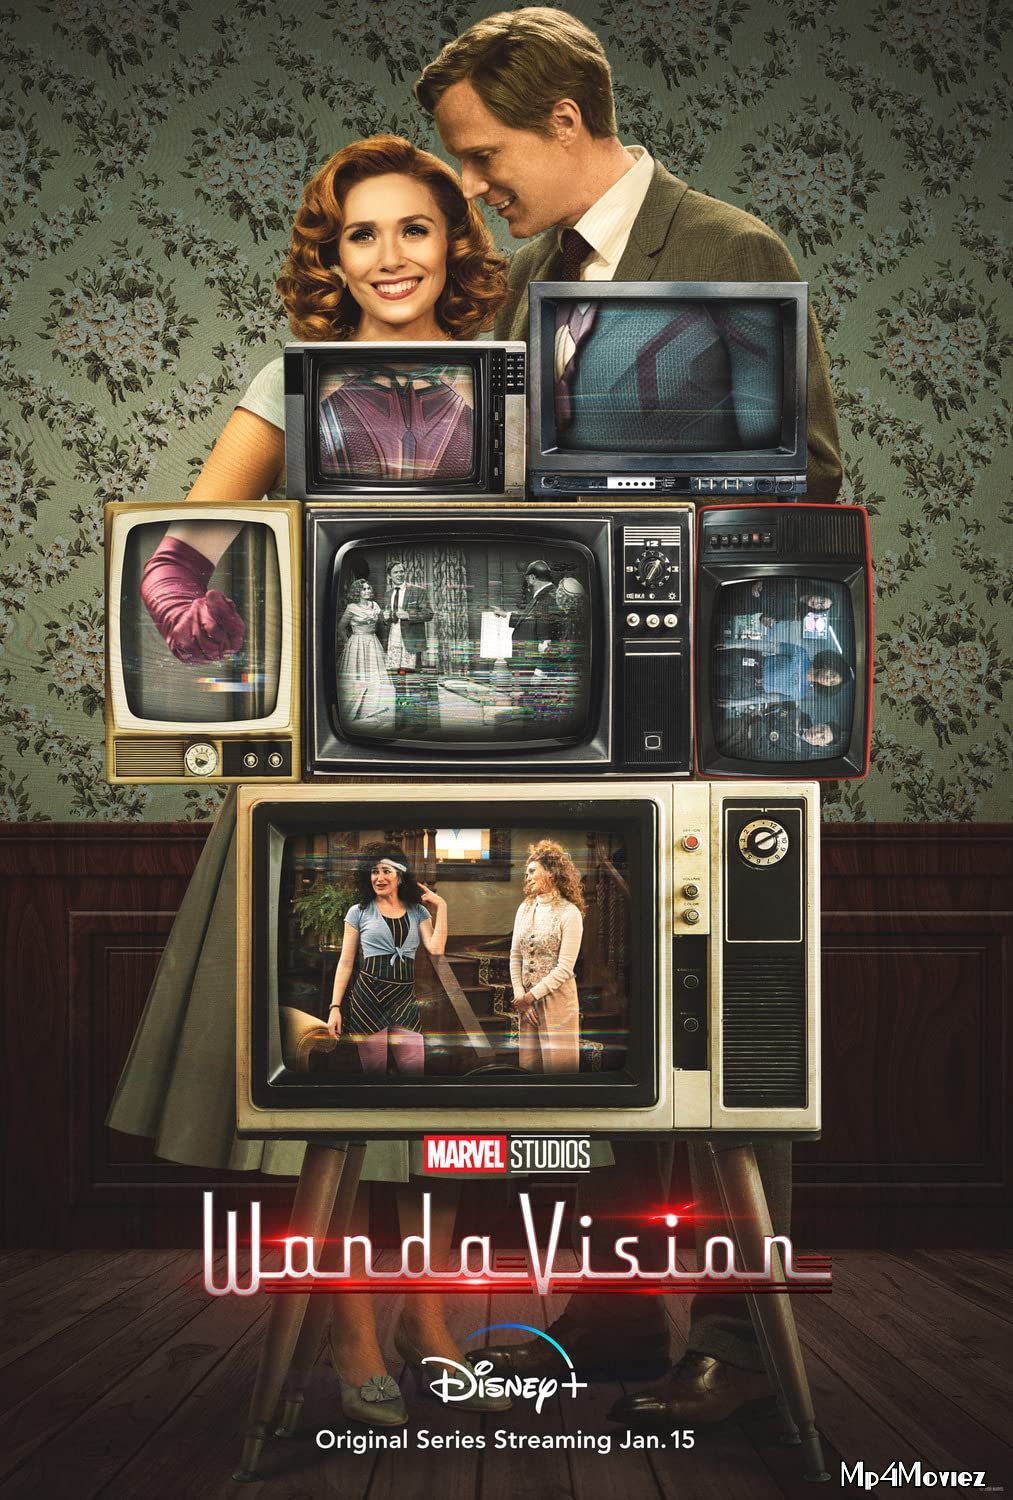 WandaVision (2021) Season 1 (Episode 4) Full Episode download full movie